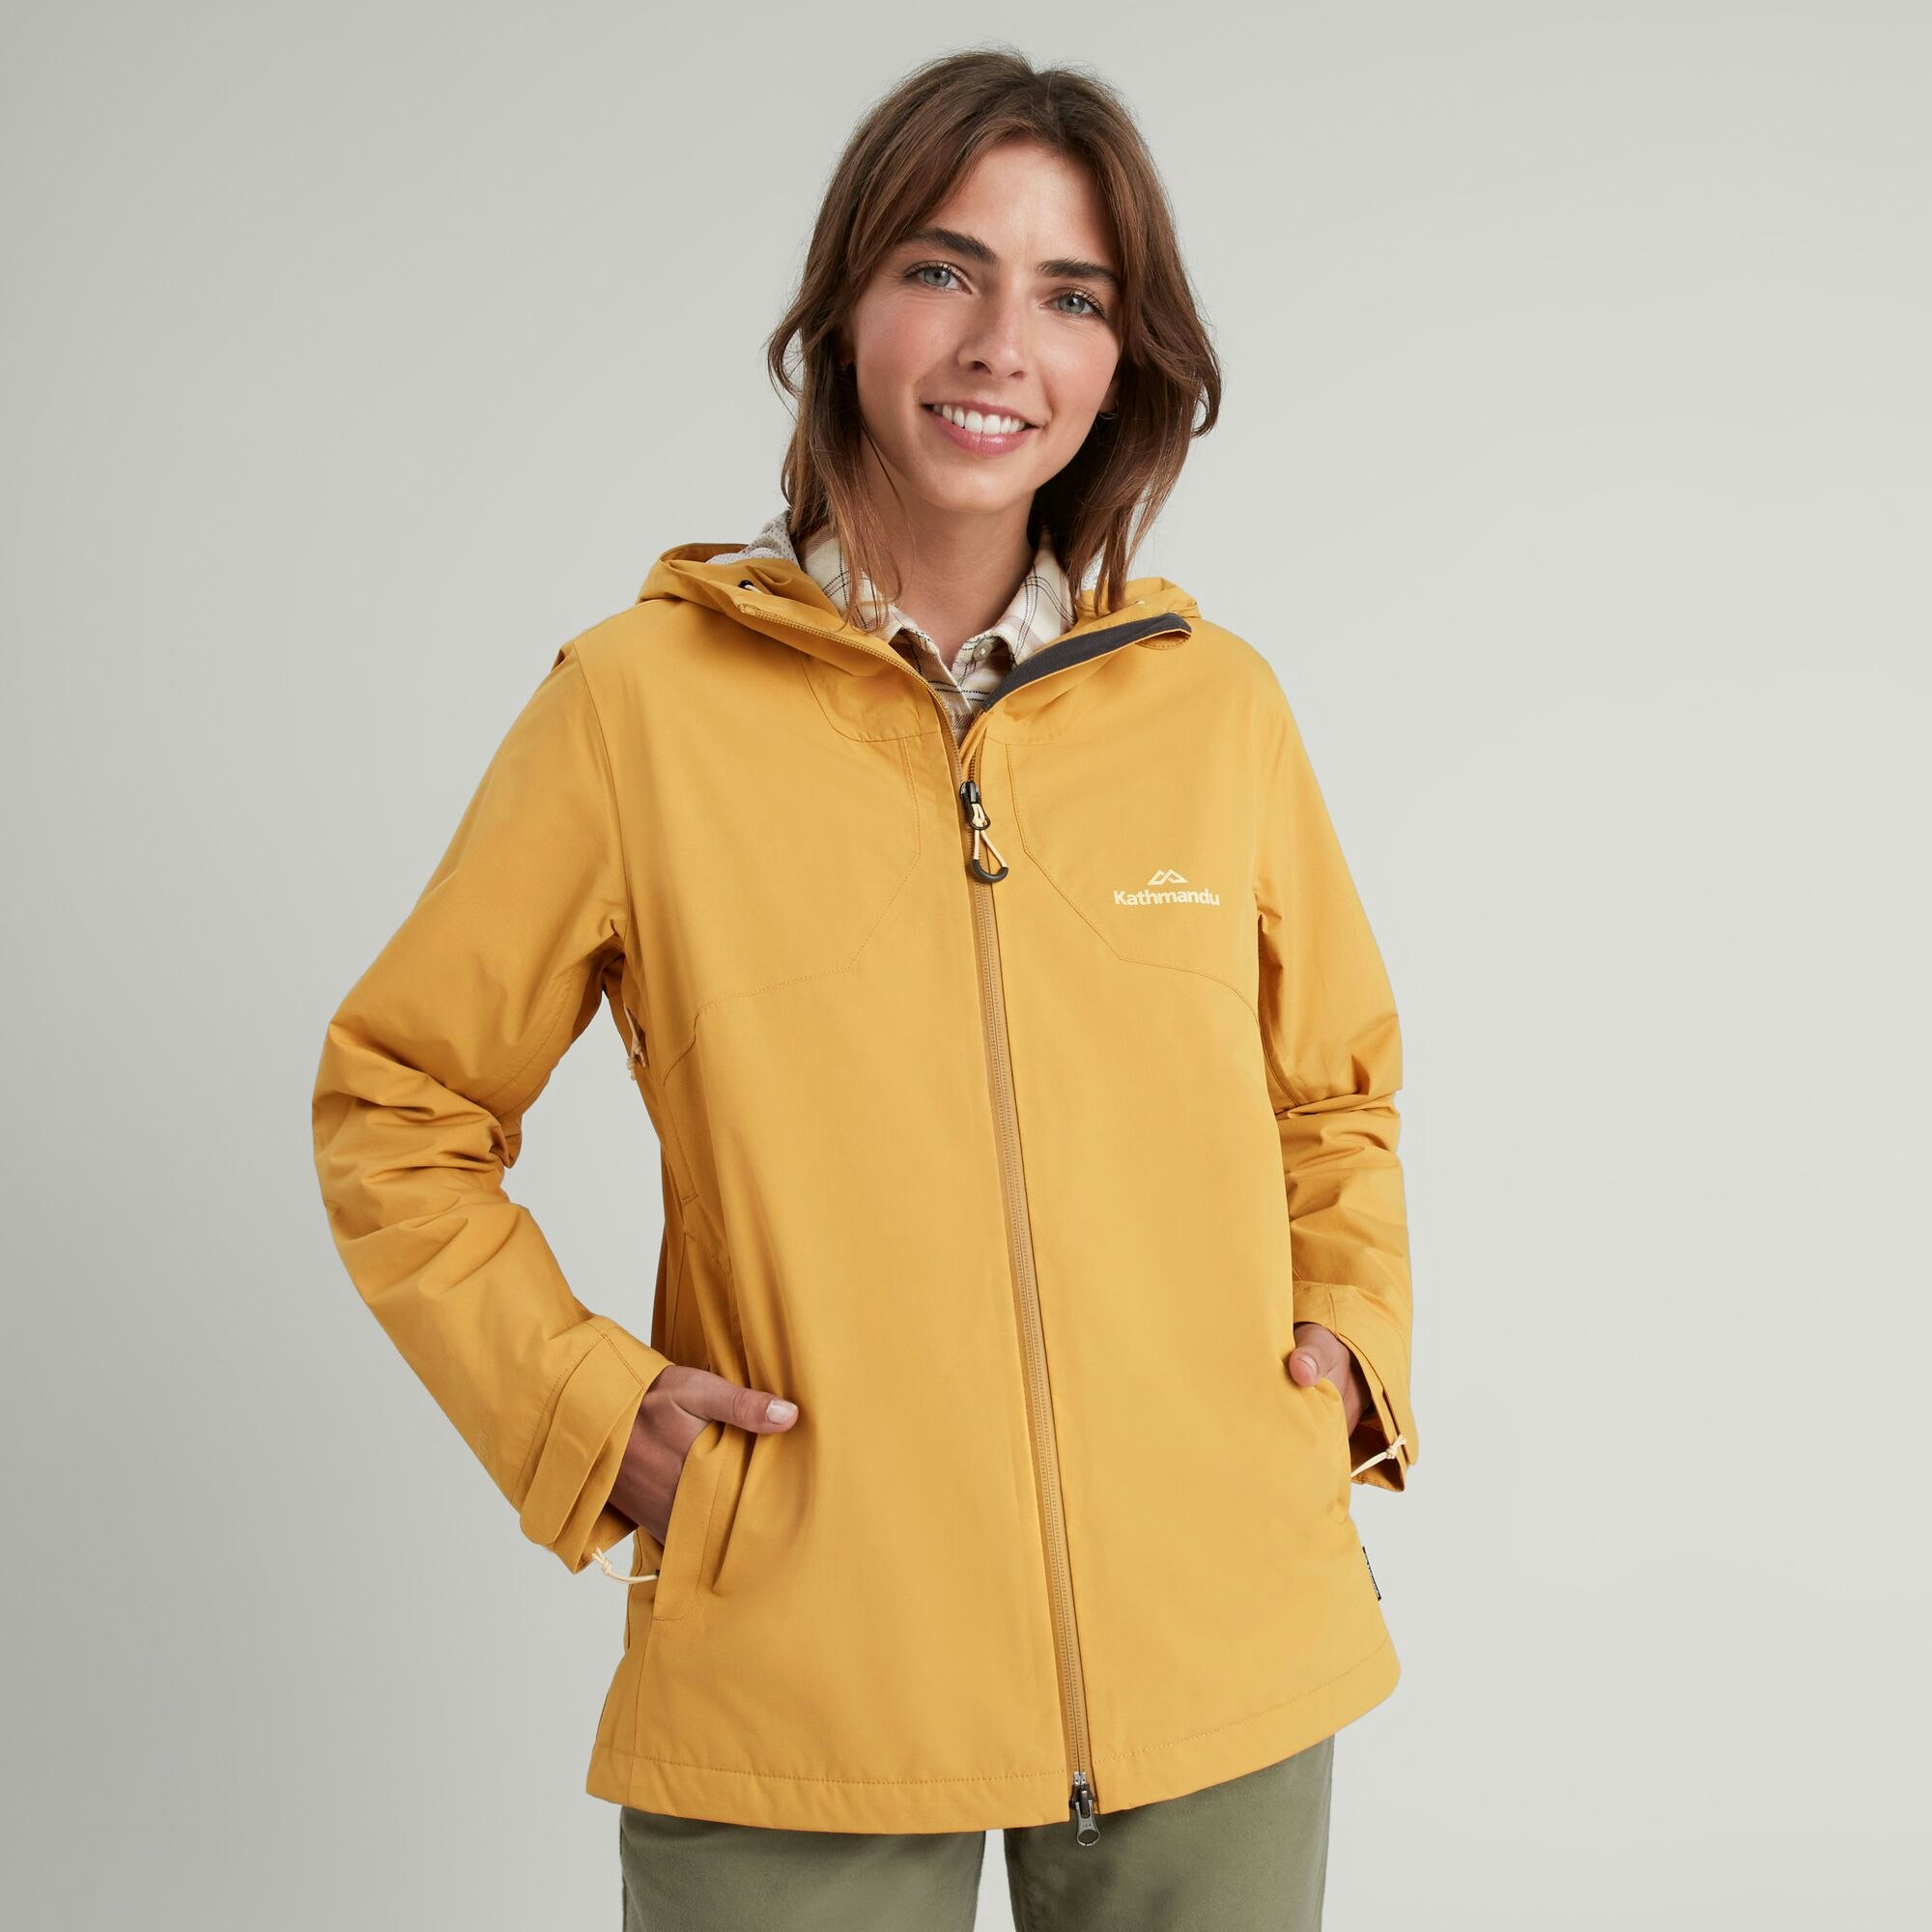 Women's Waterproof Jackets, Raincoats & Rain Jackets